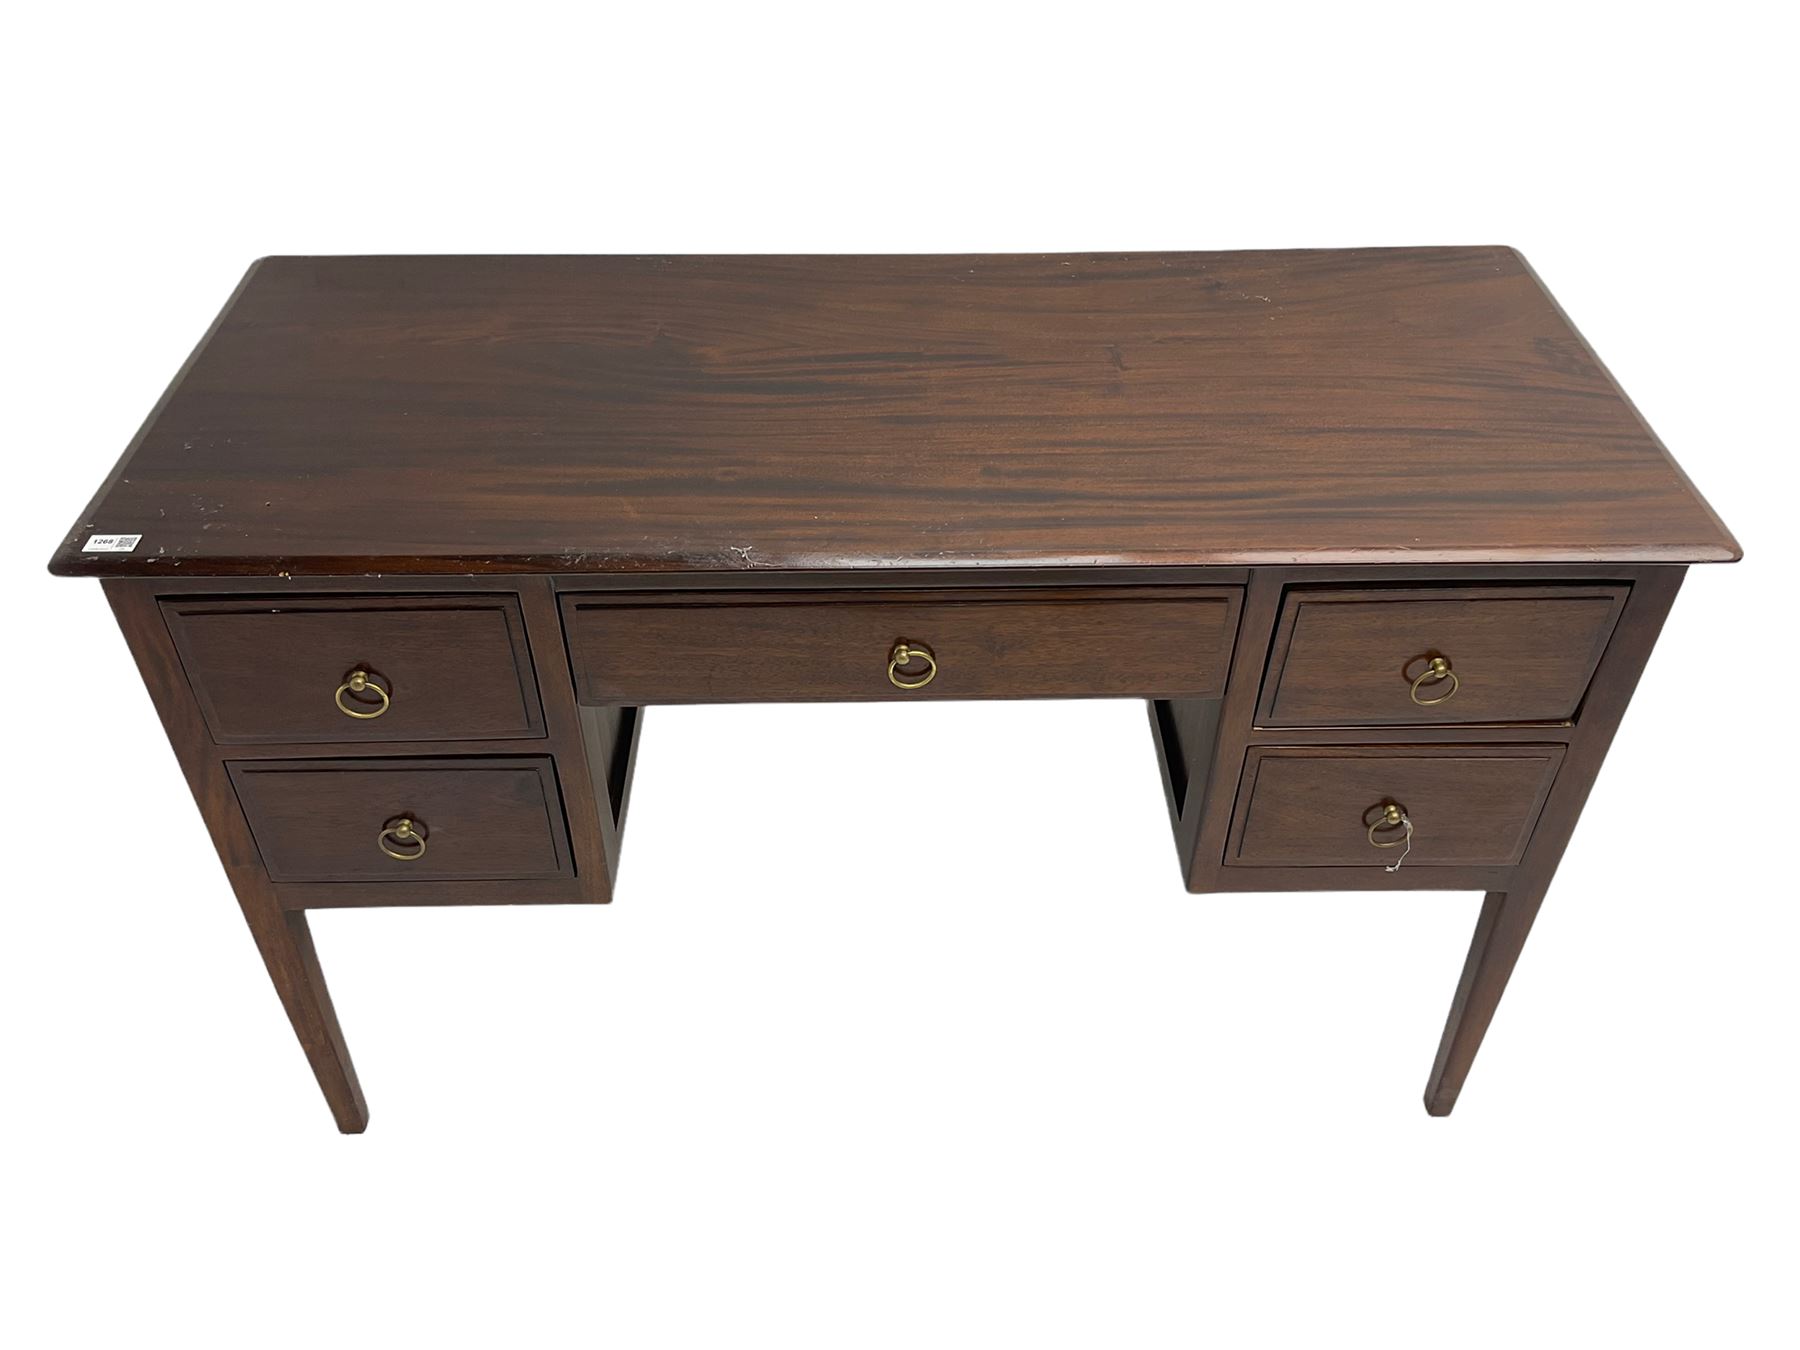 Hardwood kneehole dressing table or desk - Image 2 of 10